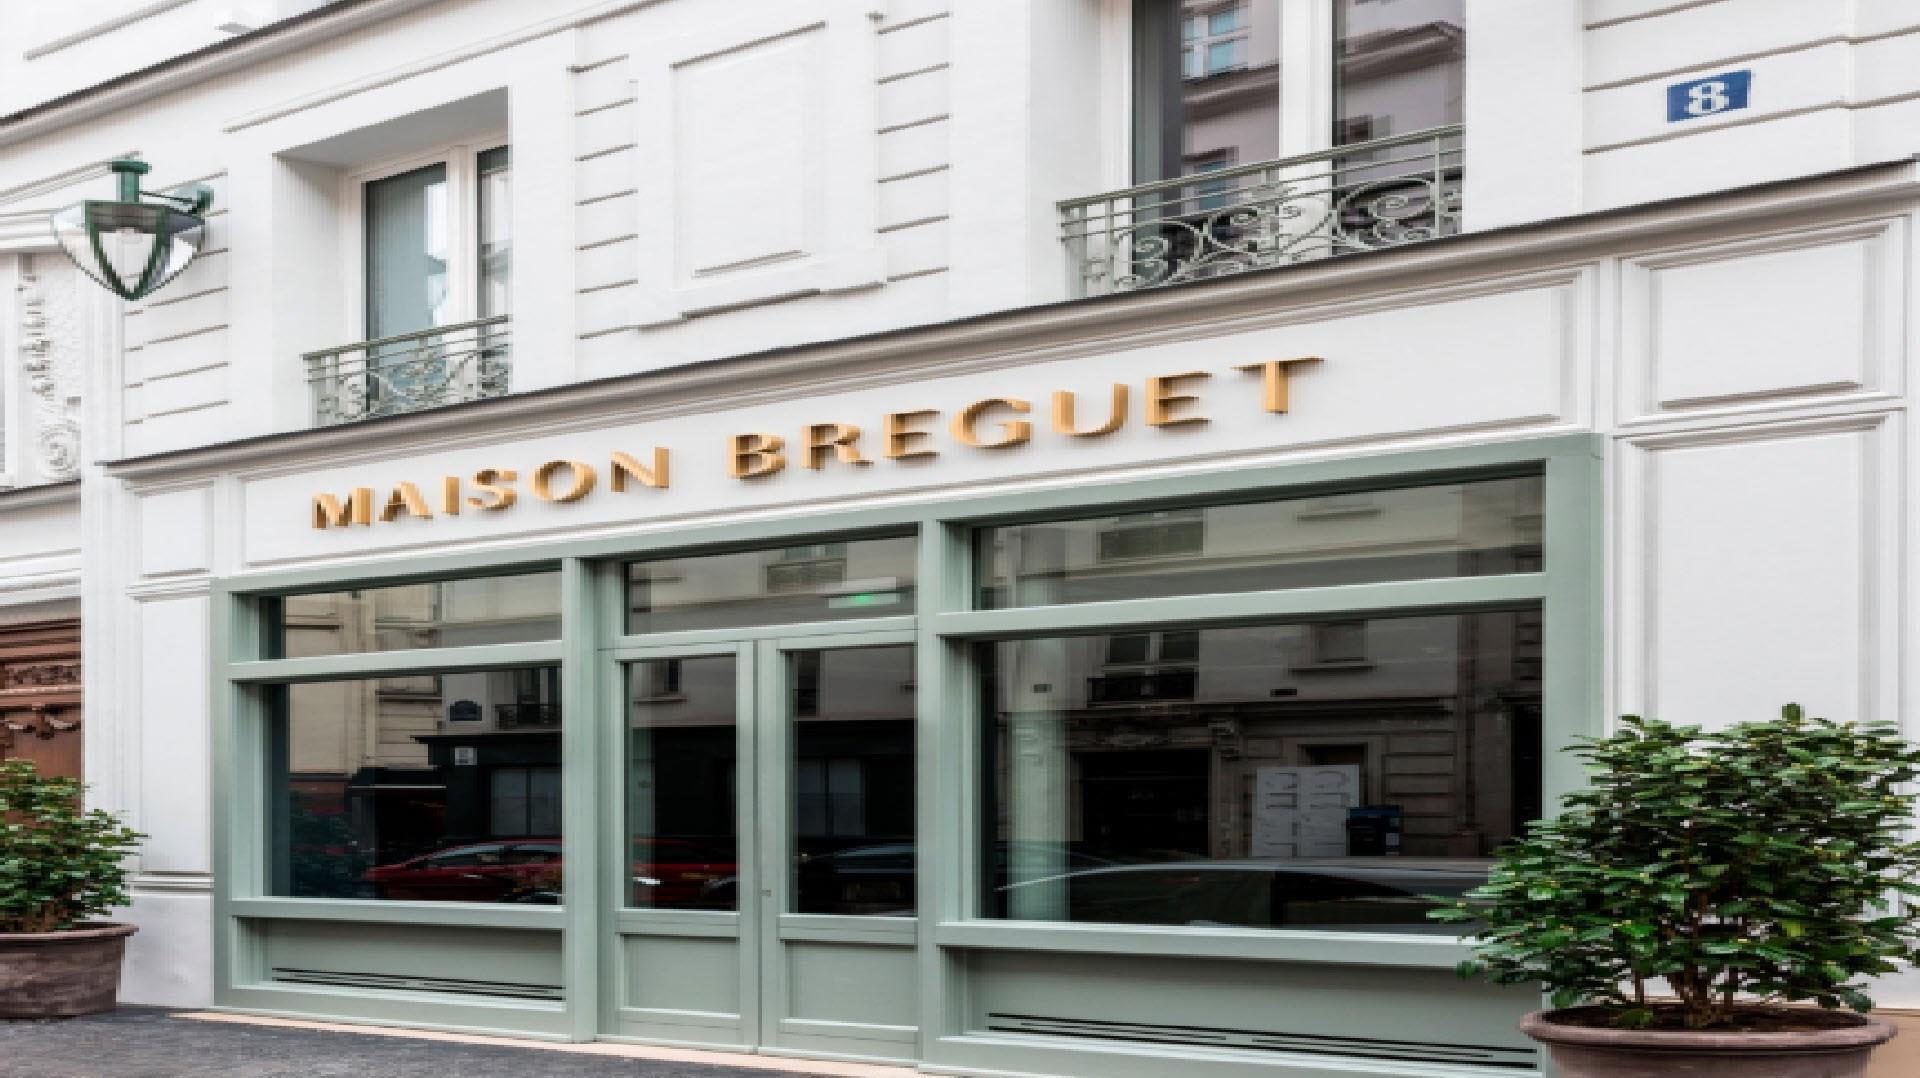 Maison Breguet in Paris, FR